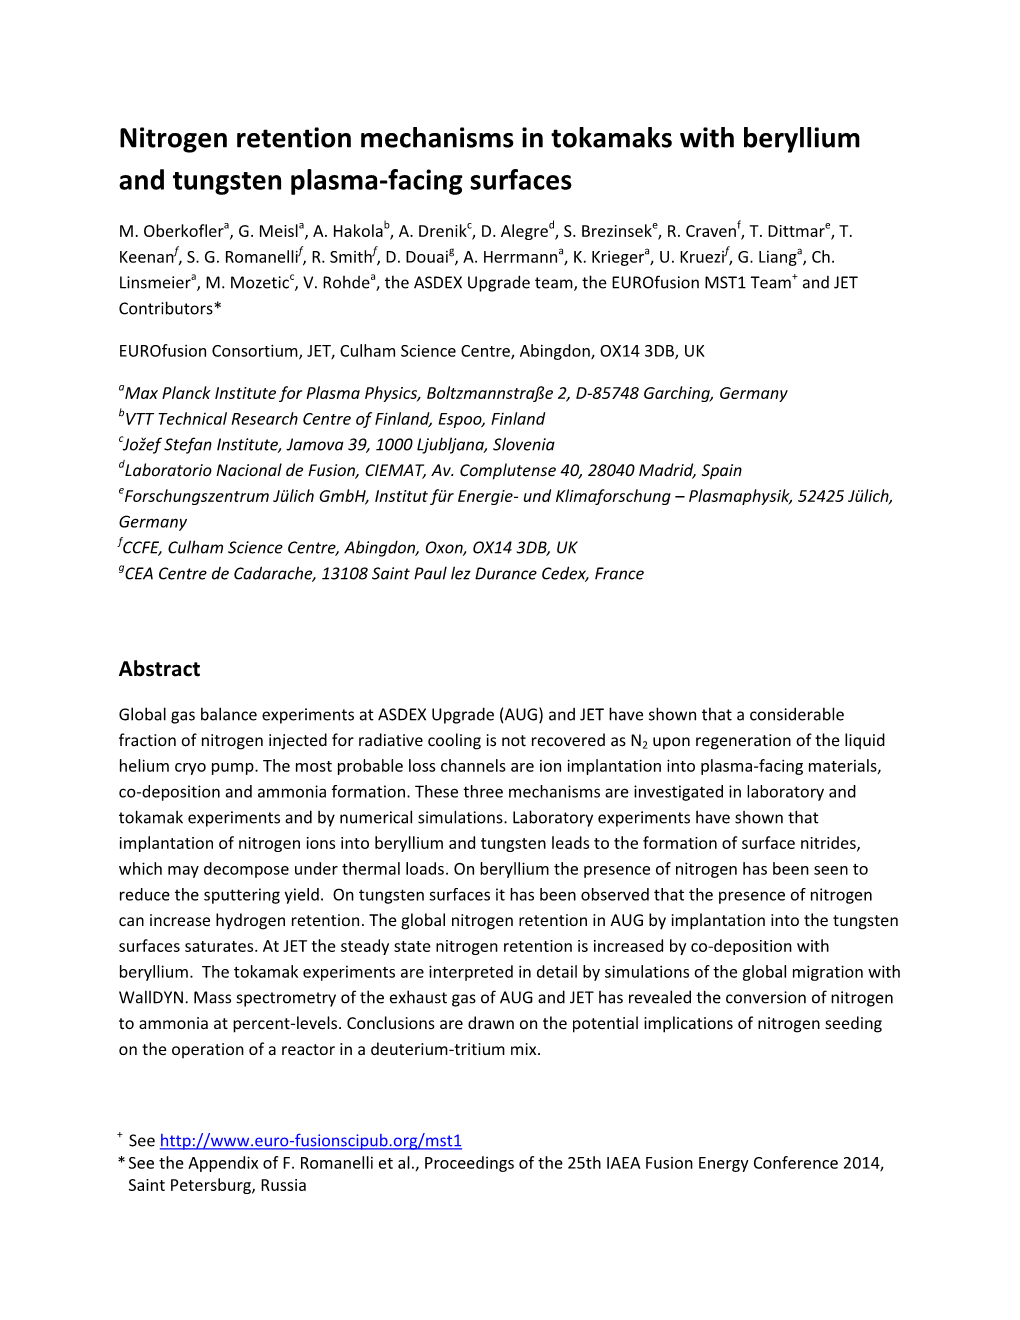 Nitrogen Retention Mechanisms in Tokamaks with Beryllium and Tungsten Plasma-Facing Surfaces